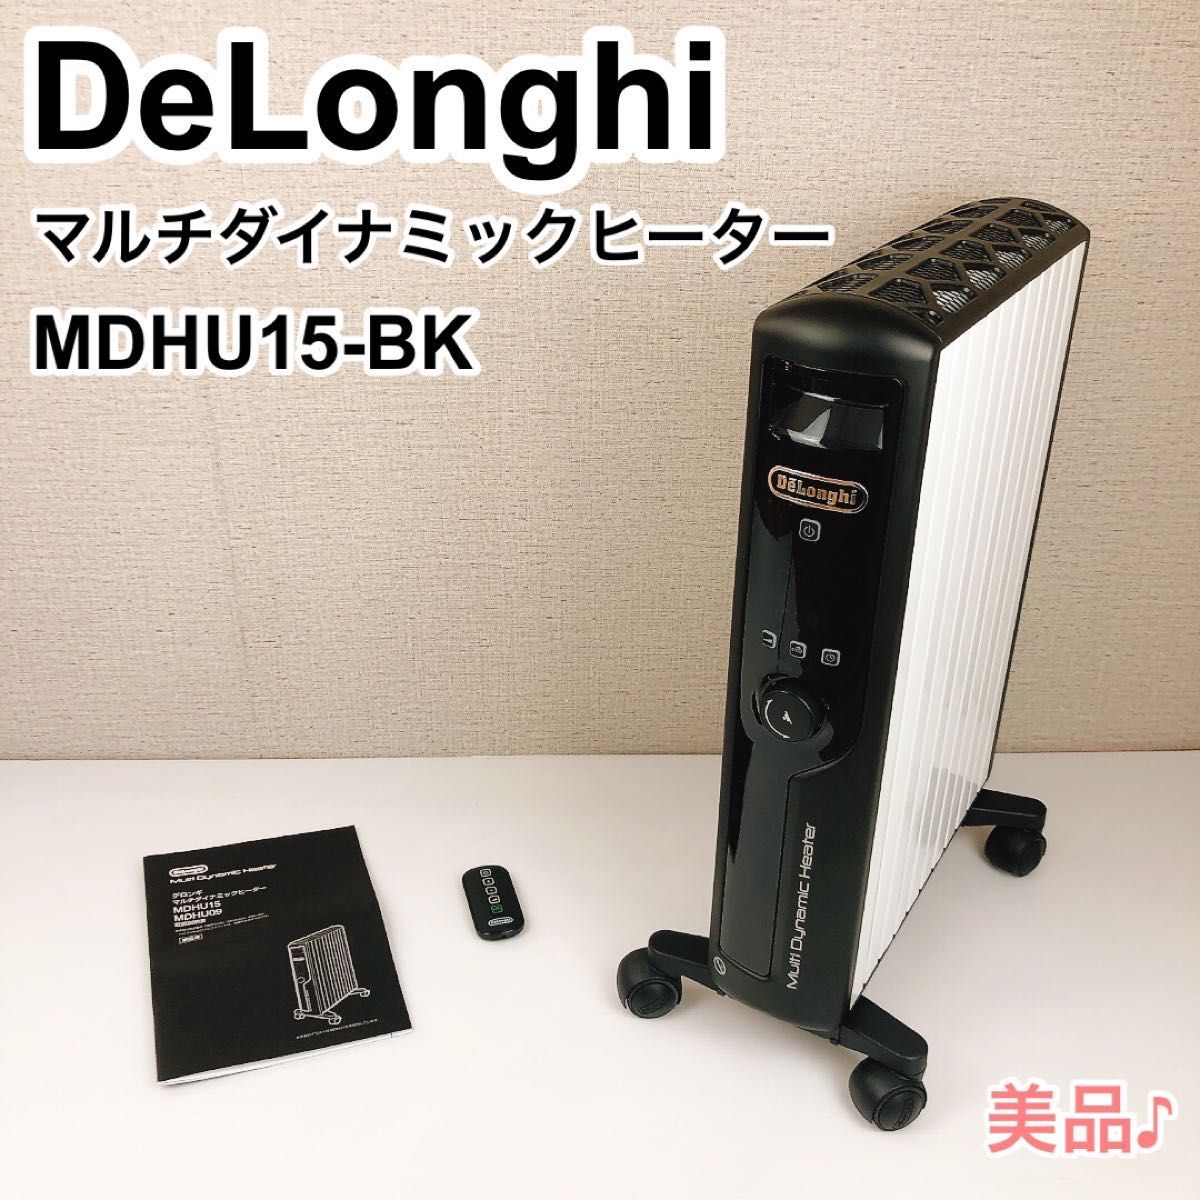 DeLonghi デロンギマルチダイナミックヒーター MDHU15-BK